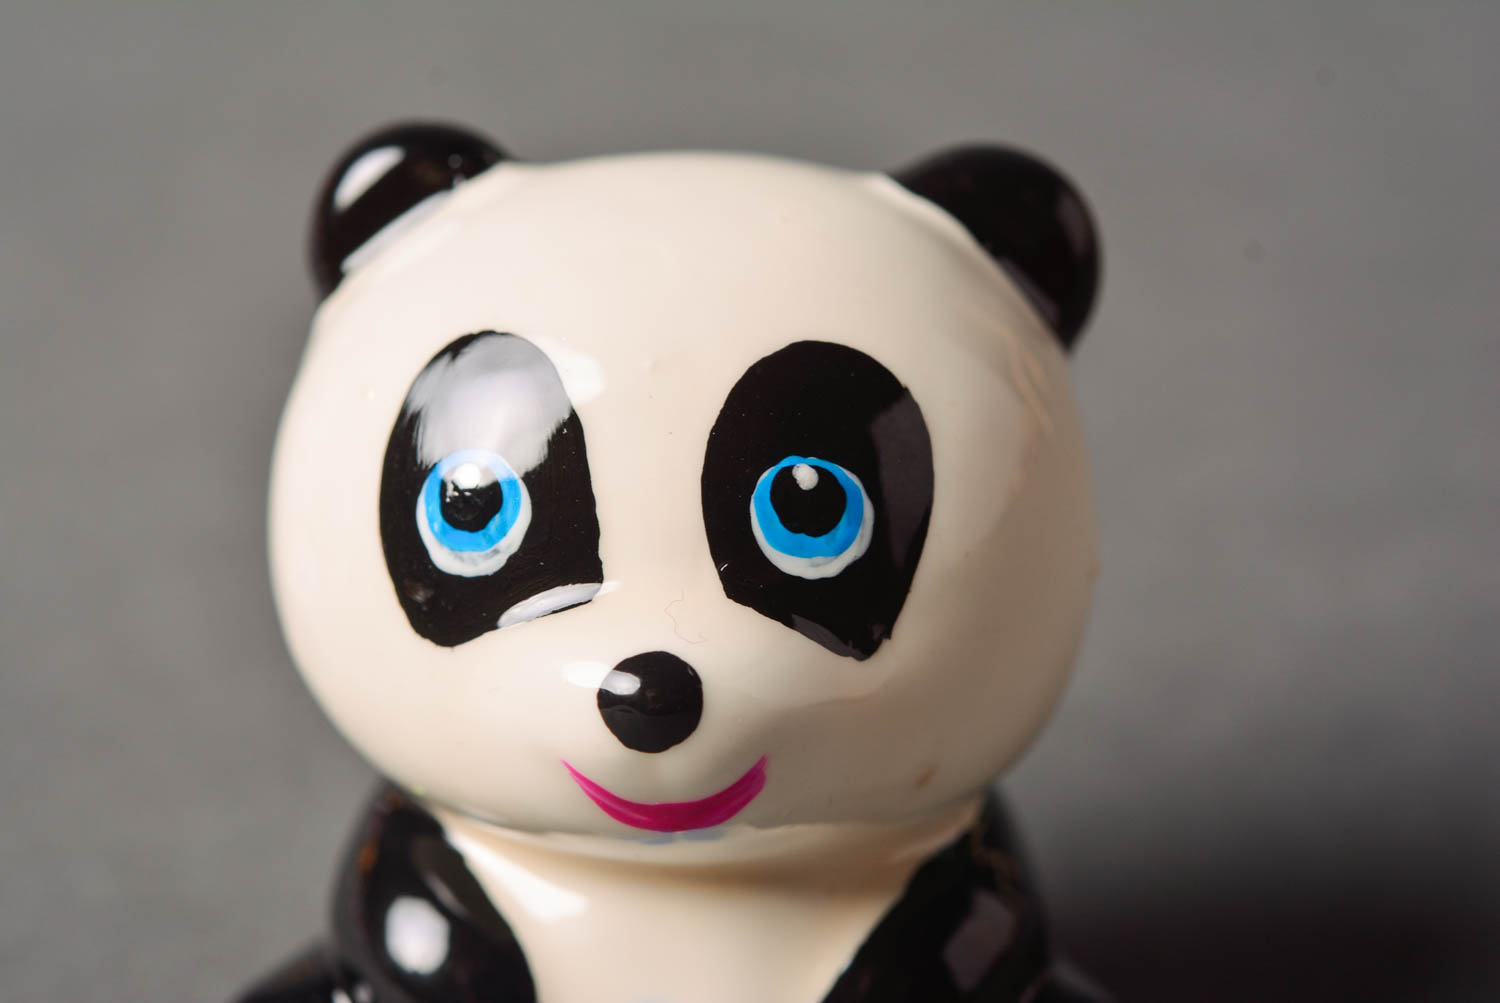 Statuetta in gesso fatta a mano figurina decorativa piccola panda carina
 foto 4